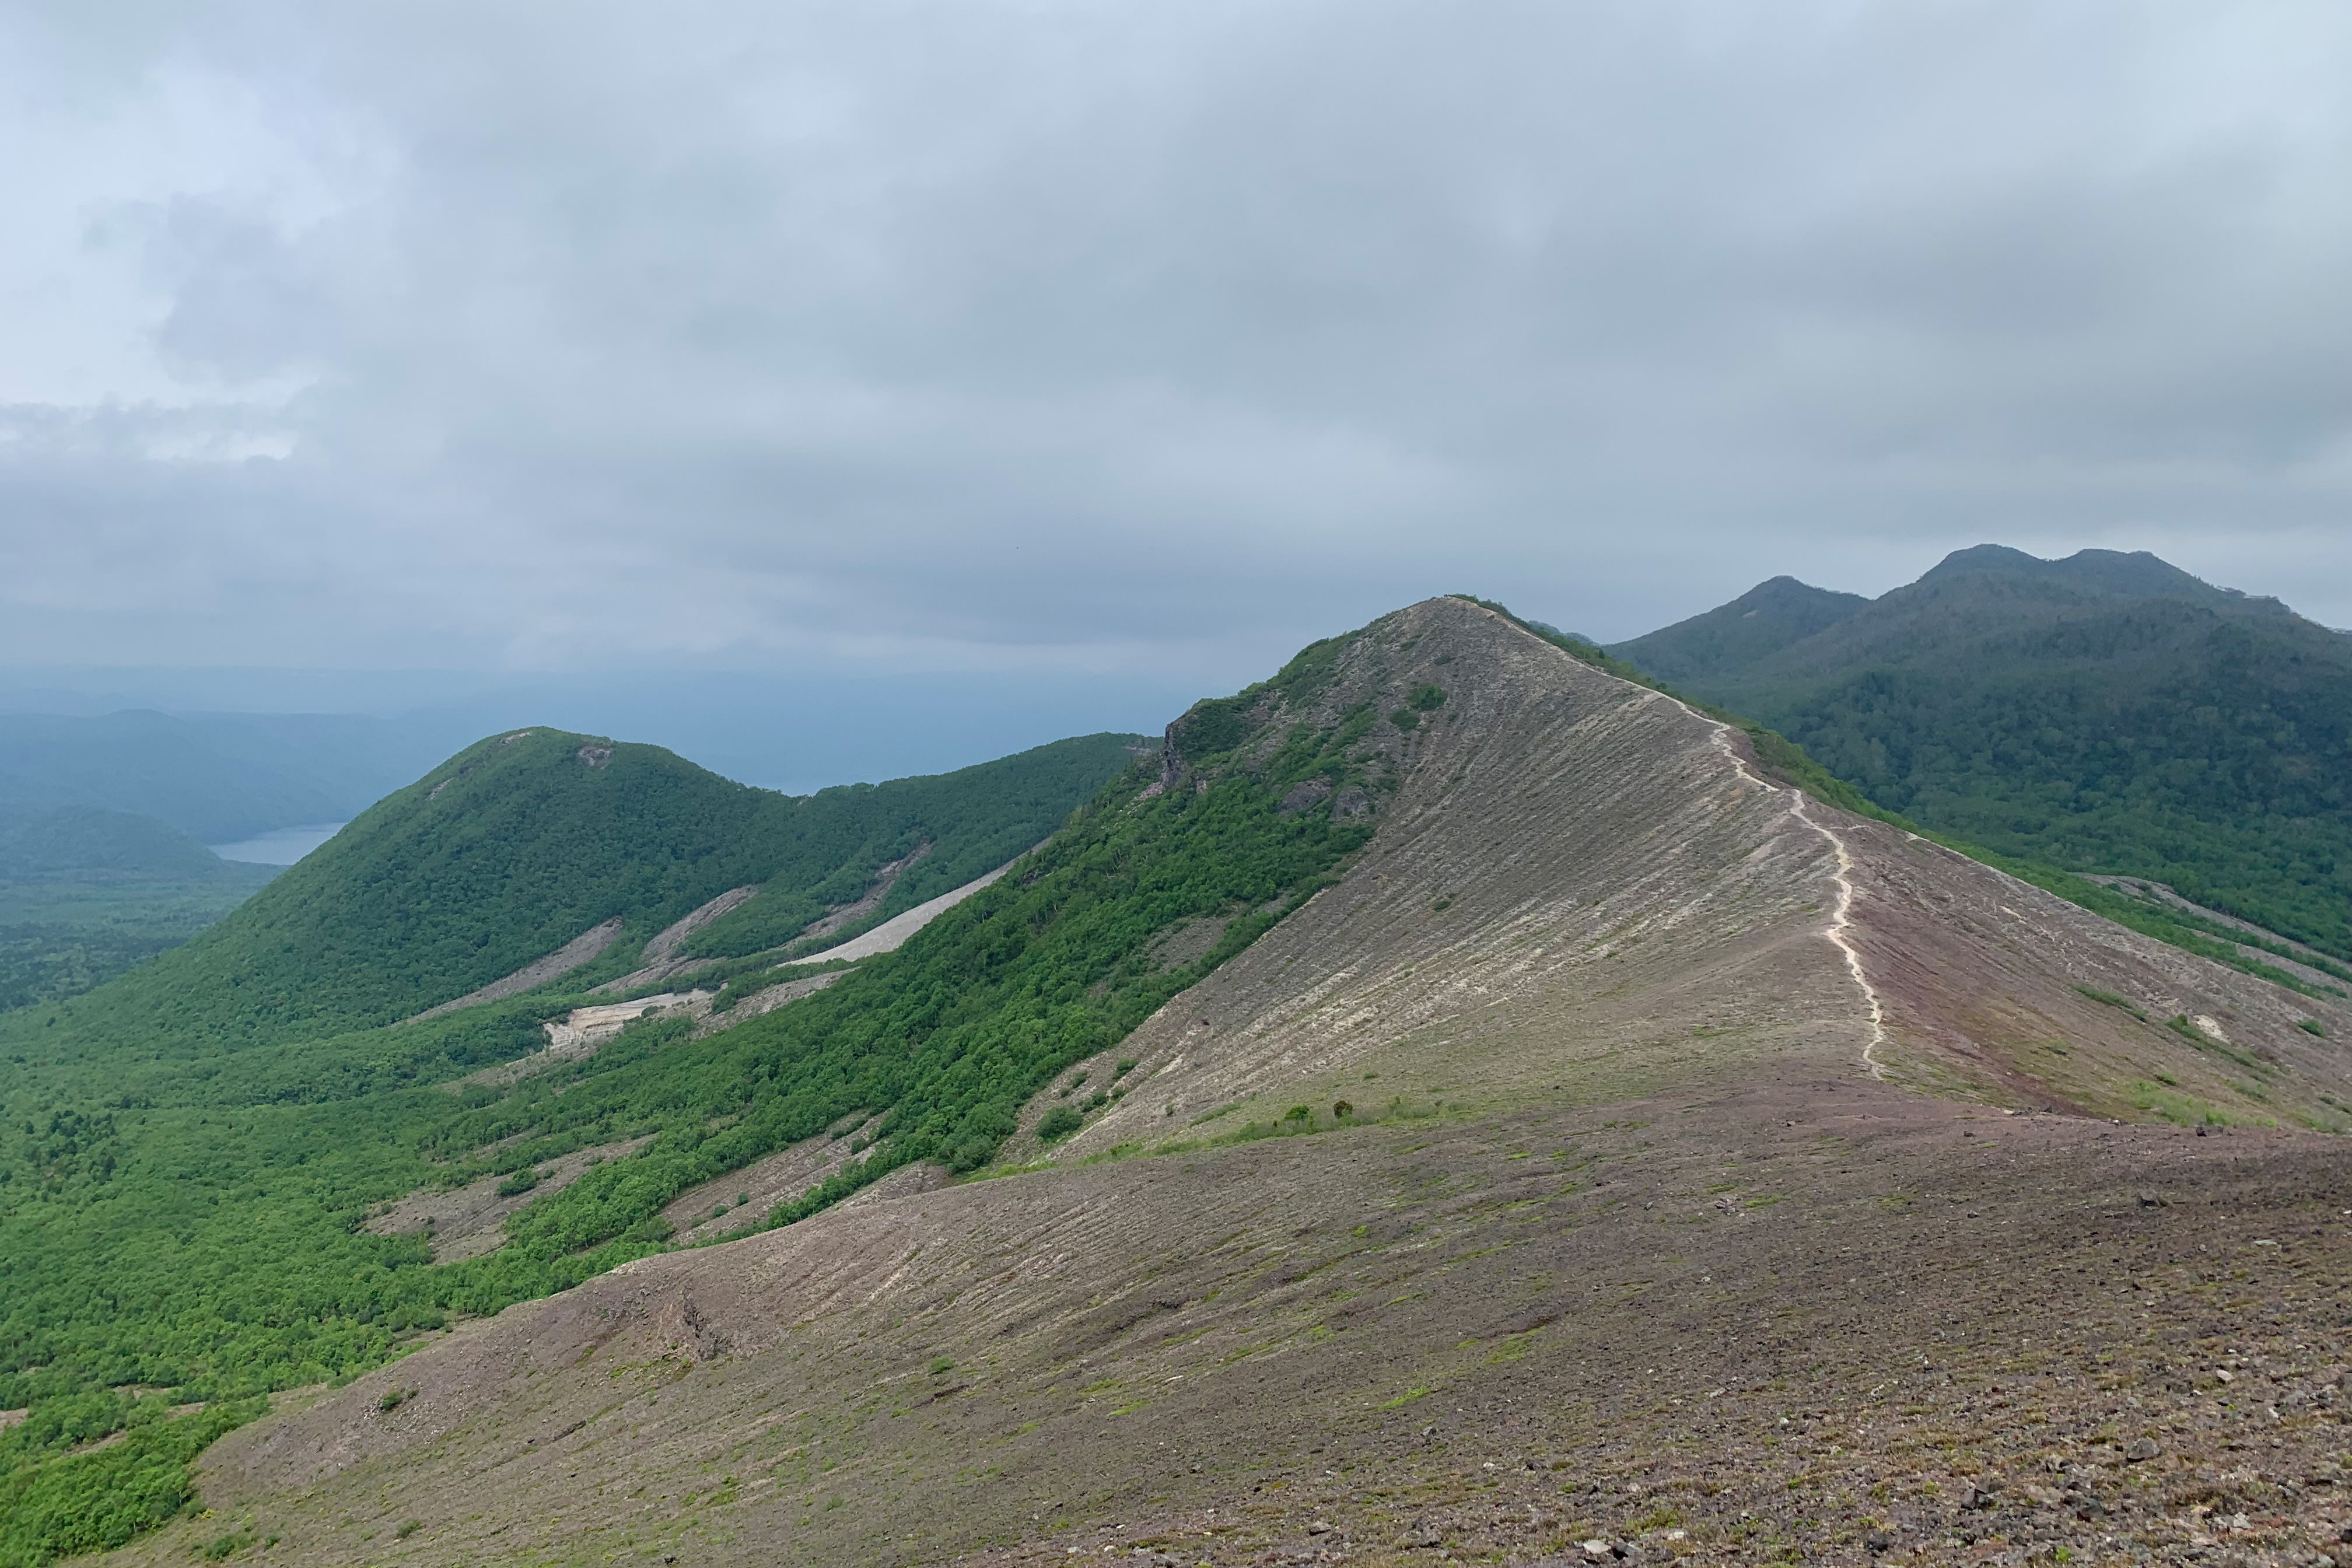 An exposed ridgeline runs from Mt Tarumae towards Lake Shikotsu in the Shikotsu–Toya National Park